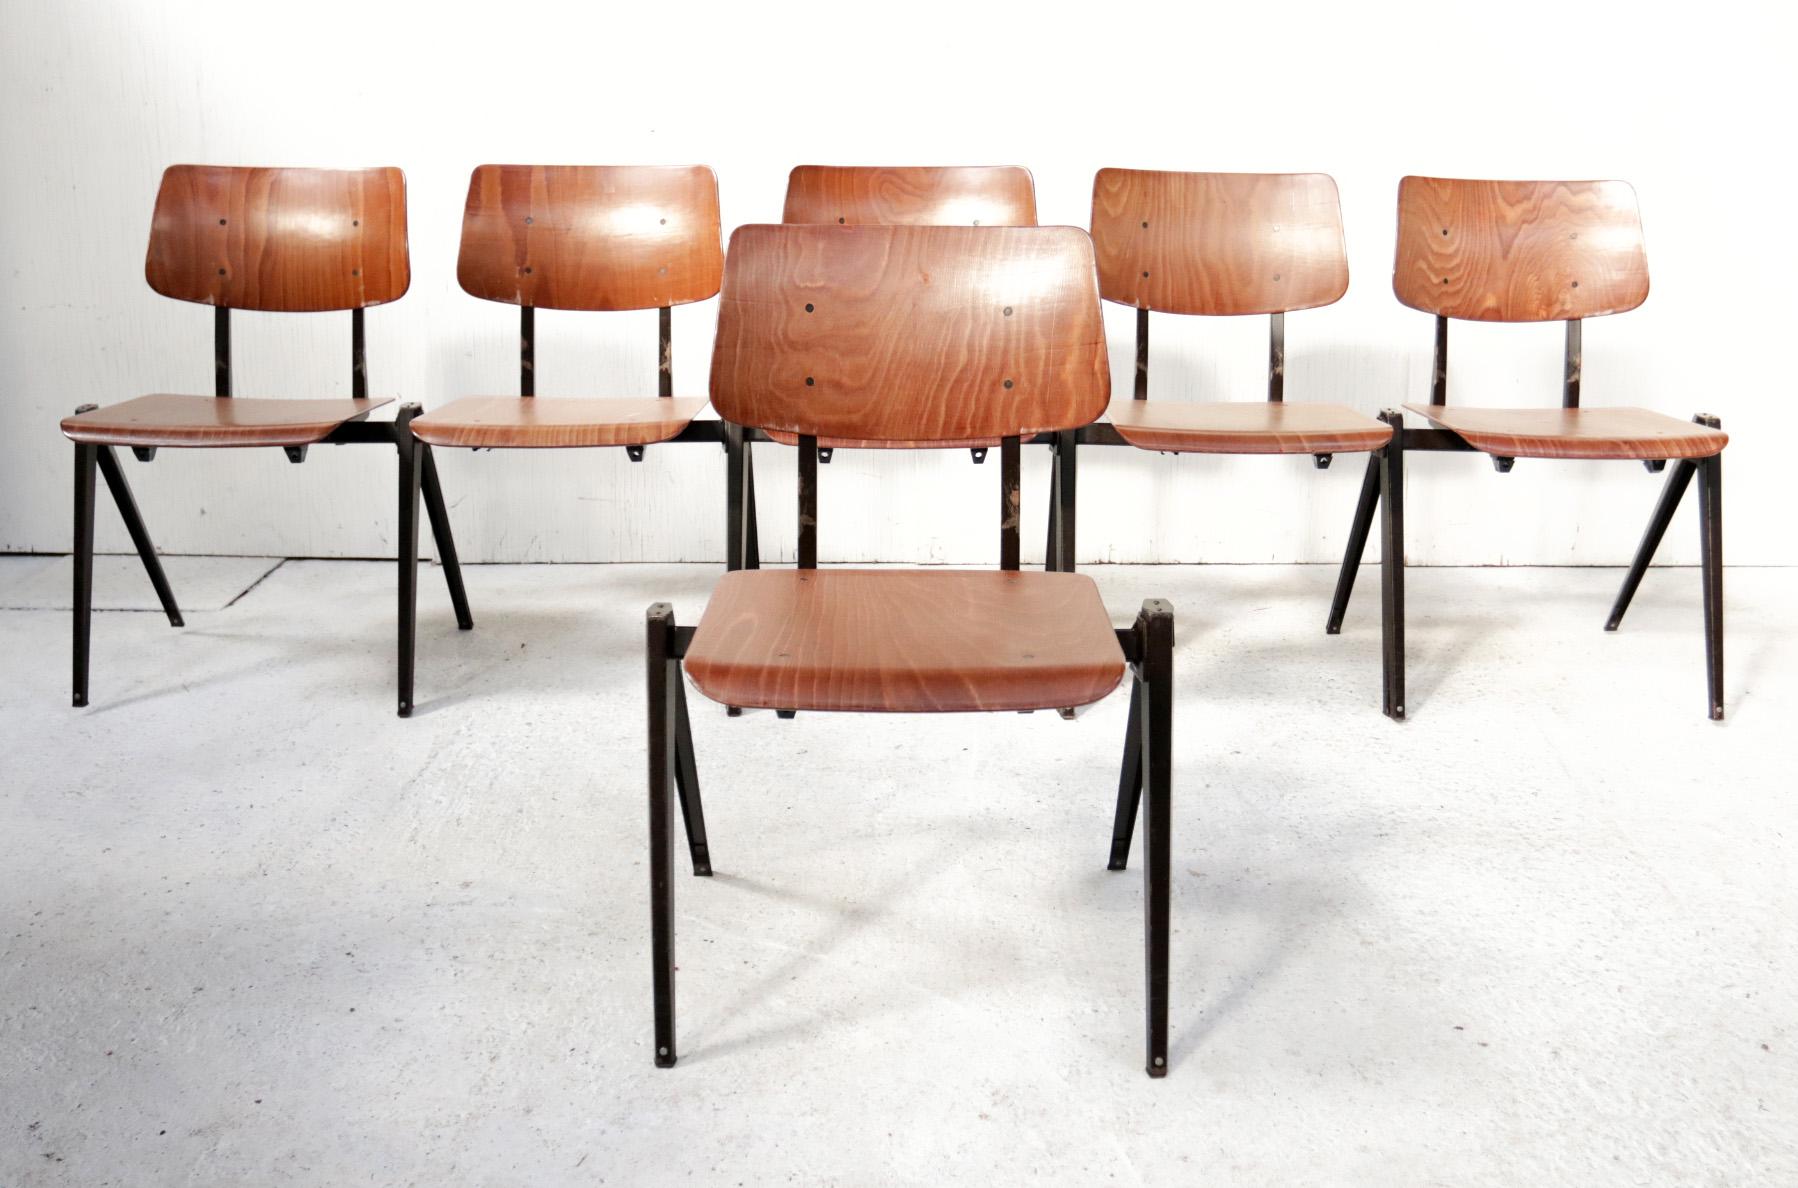 10 x Dutch Industrial Design Prouve Style School Chairs S21 Compas Galvanitas For Sale 2